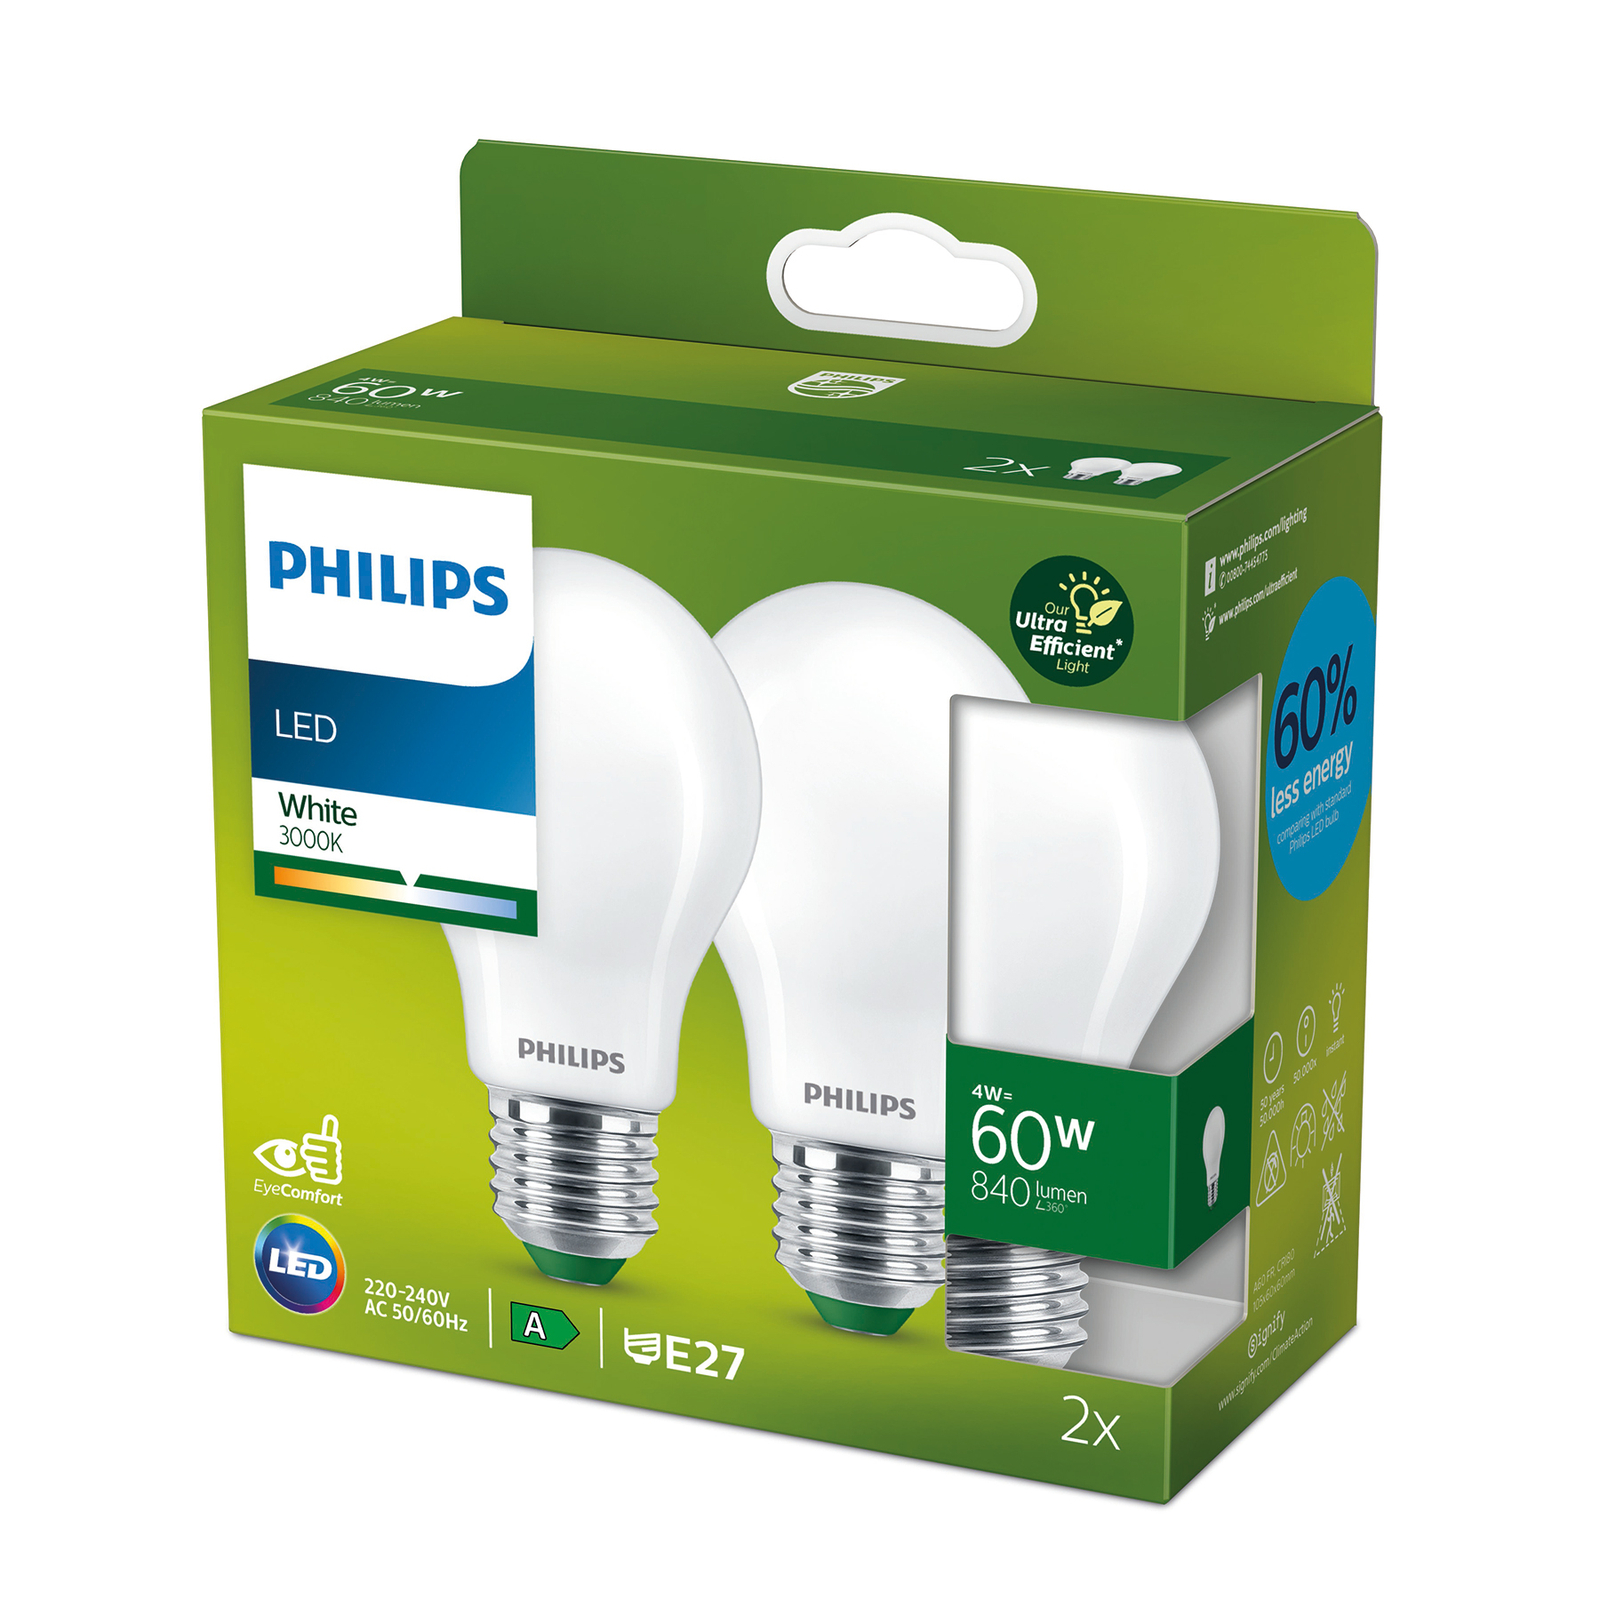 Philips LED lamp E27 4W 840lm mat 3.000K per Lampen24.be